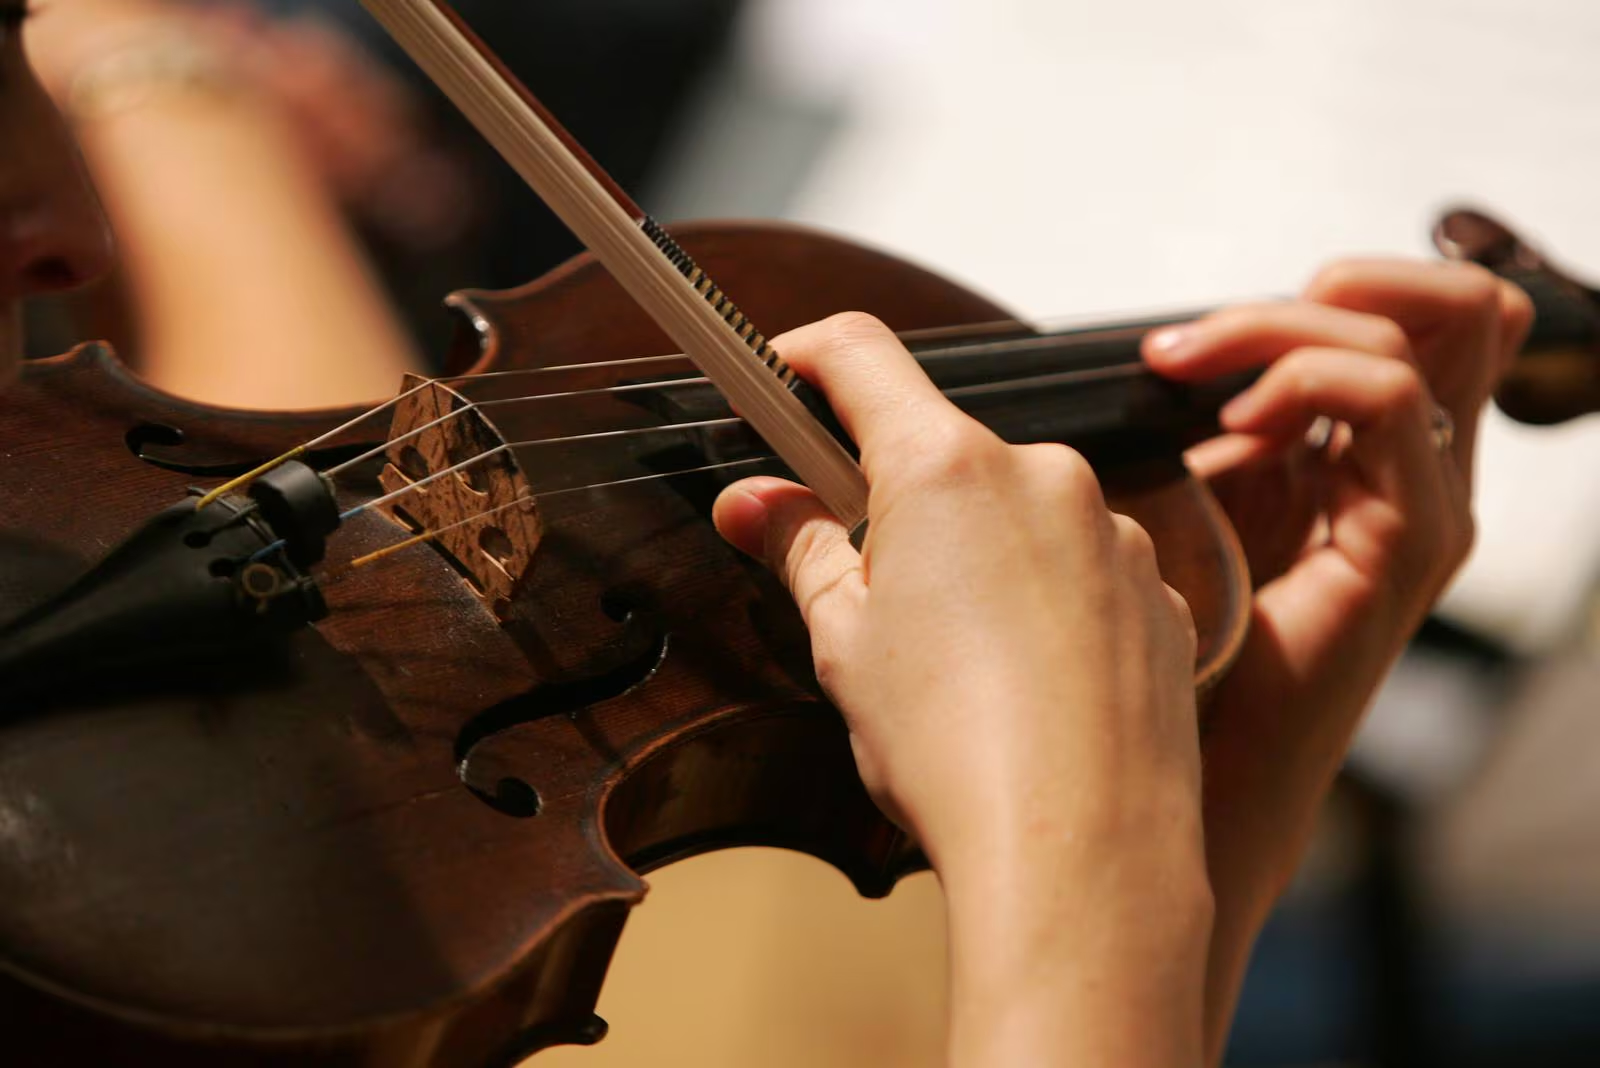 Irish Study Revealing Musicians Playing-Related Muscular Pain